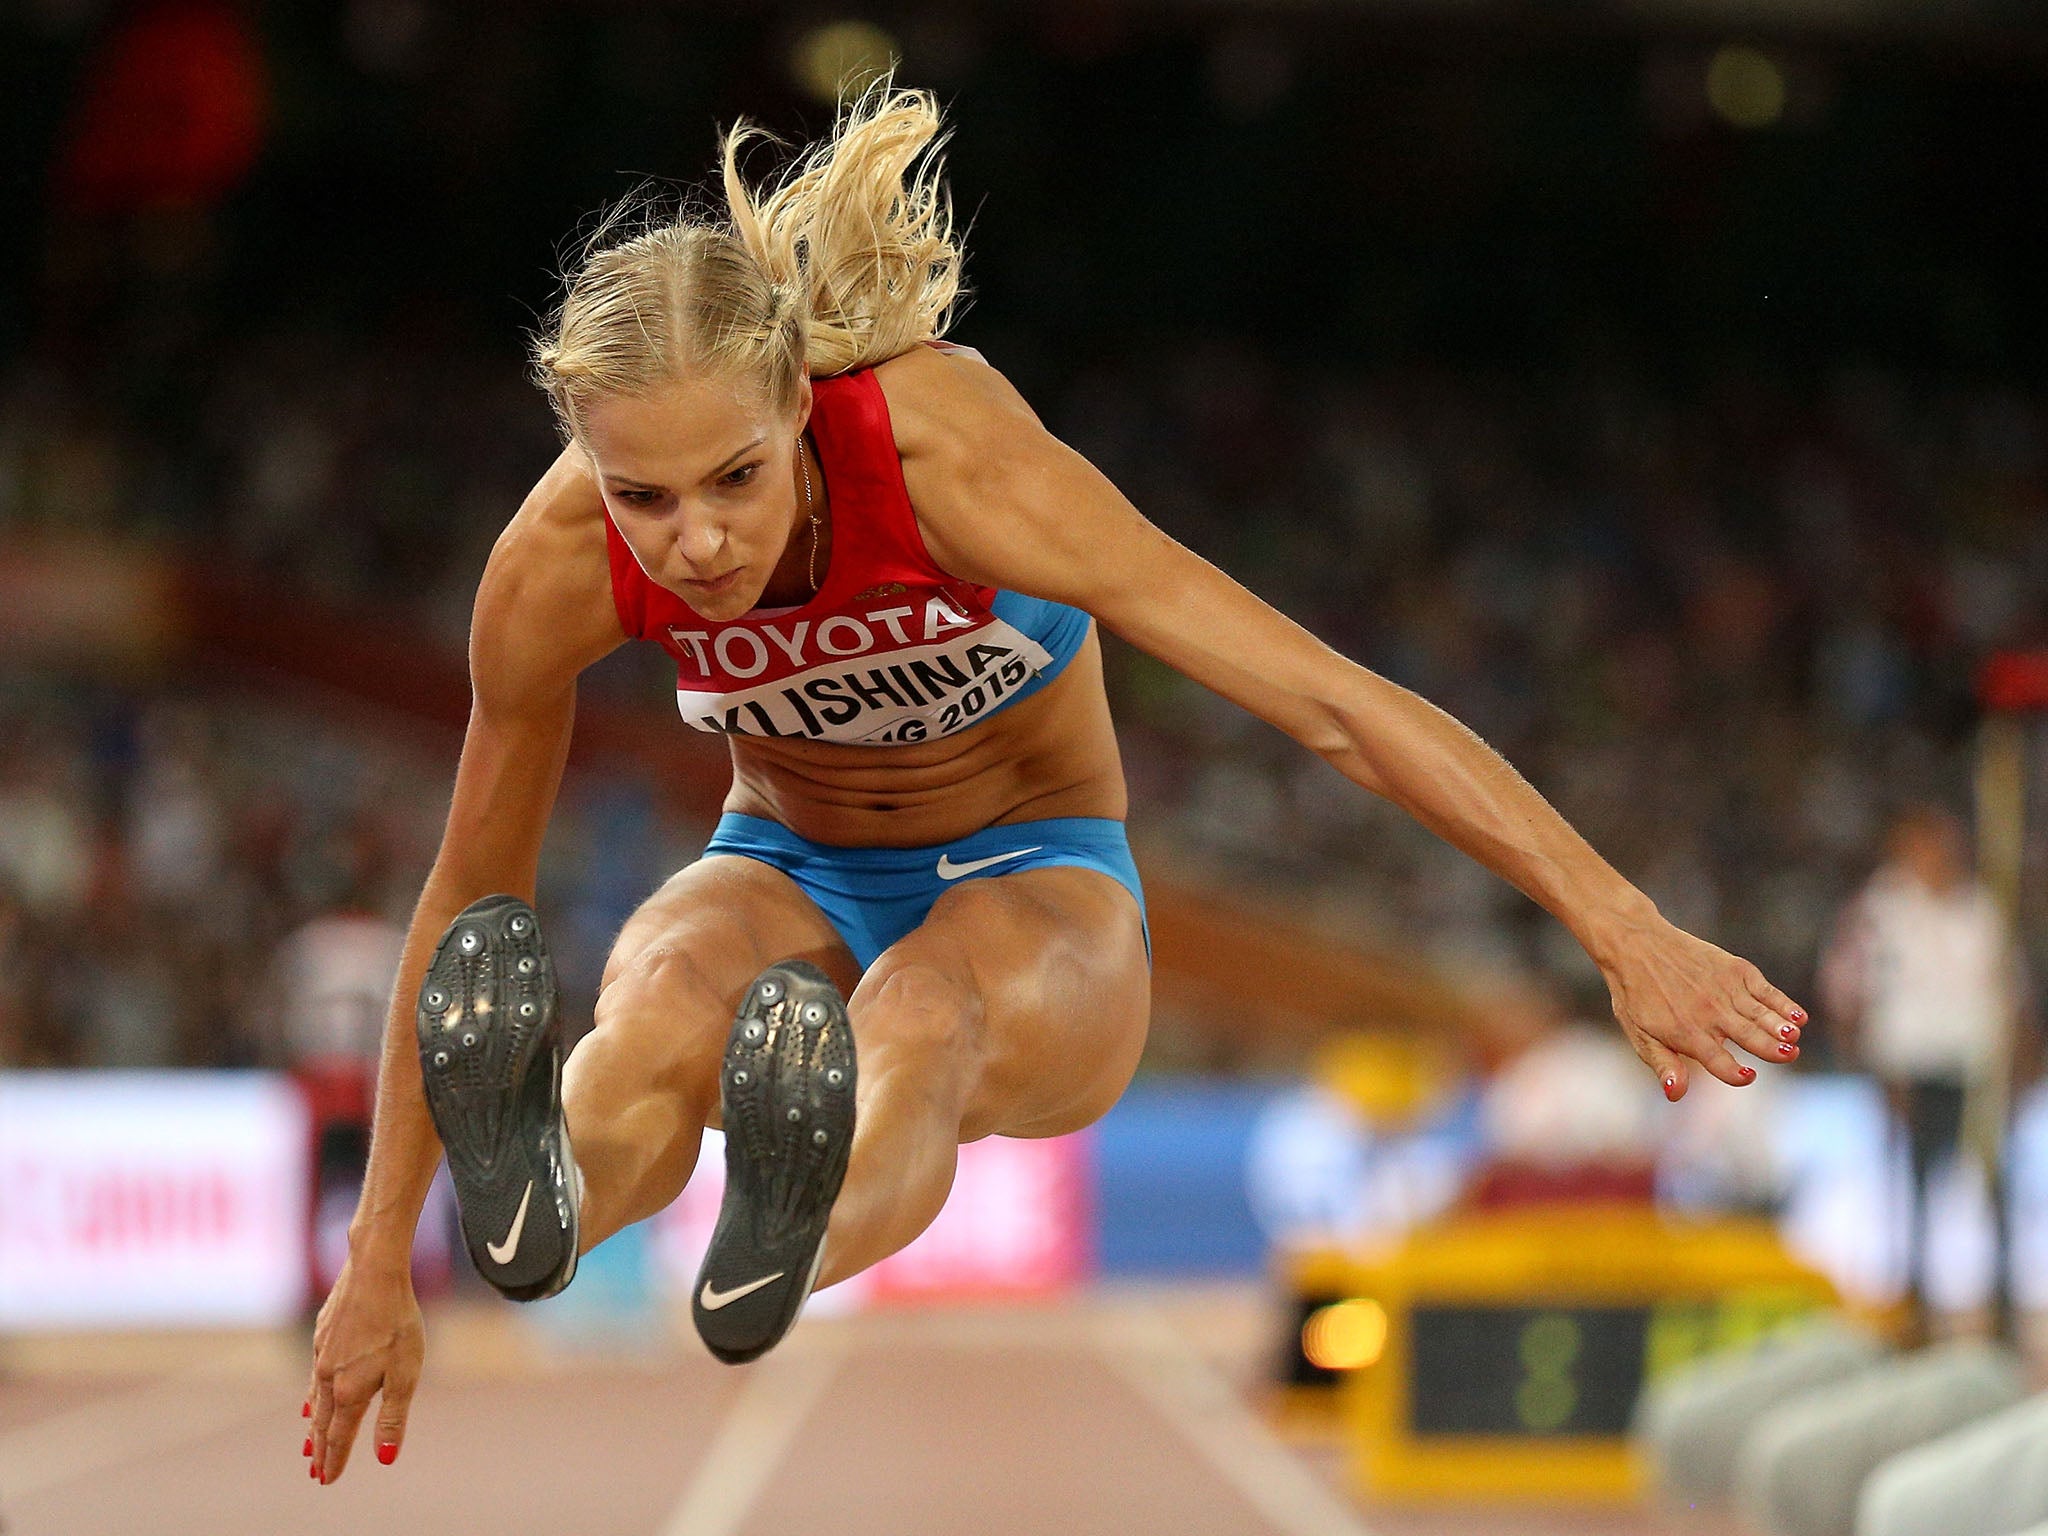 Russian long jumper Darya Klishina will compete as a 'neutral'